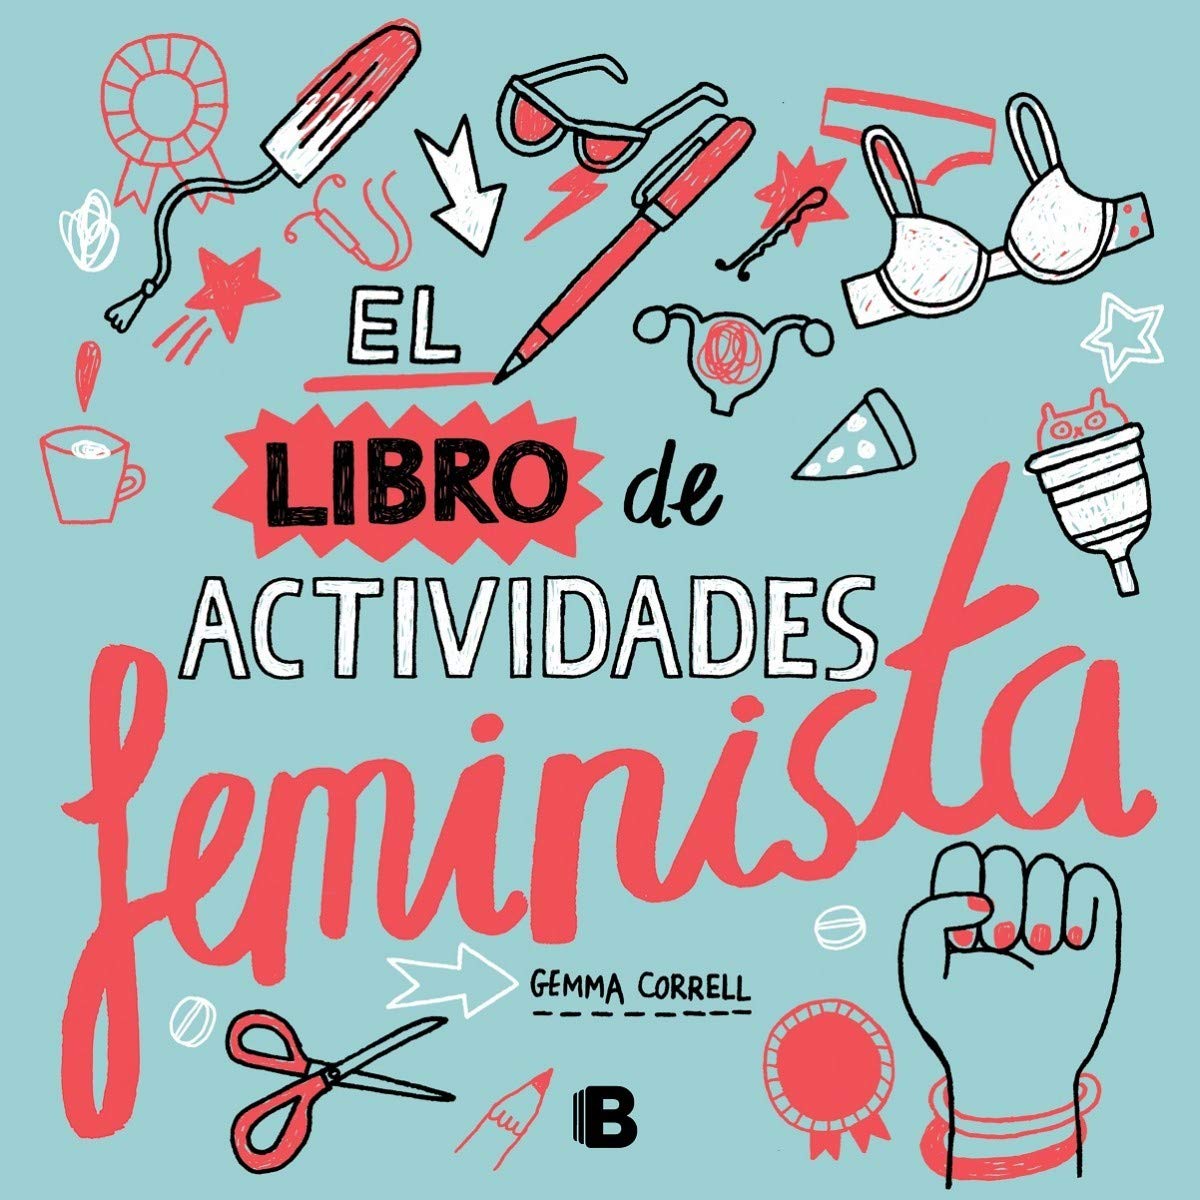 El libro de actividades feminista, Gemma Correll